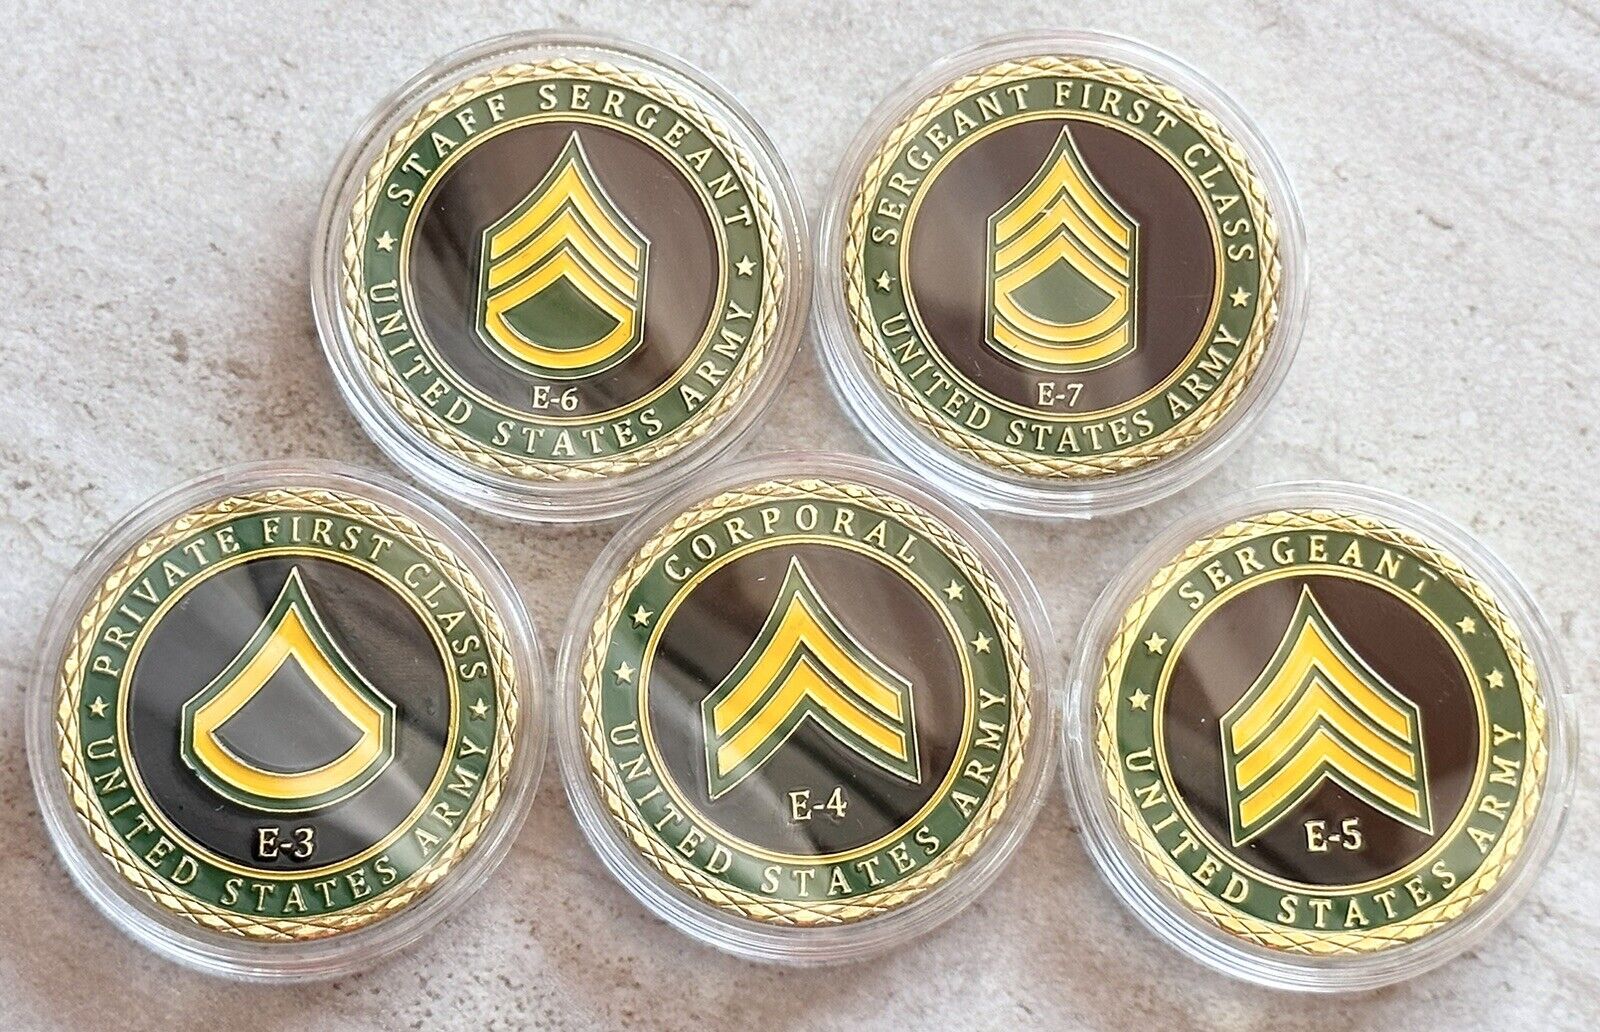 5 Pcs US ARMY Rank E-3, CORPORAL E-4, Sergeant E-5, E-6, E-7 Challenge Coin